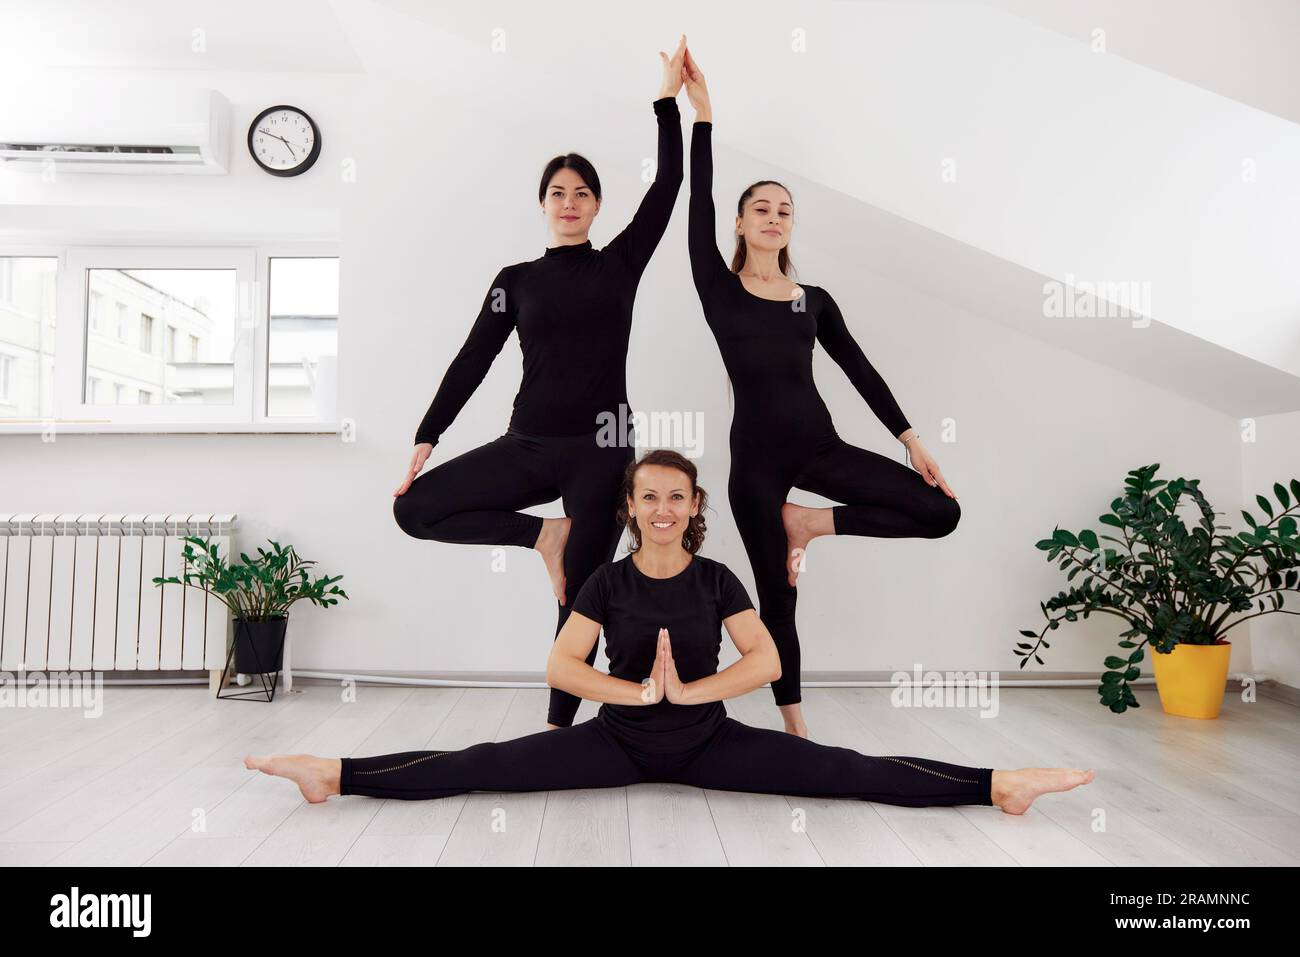 Yoga & Men | Acro yoga poses, Partner yoga poses, Yoga challenge poses